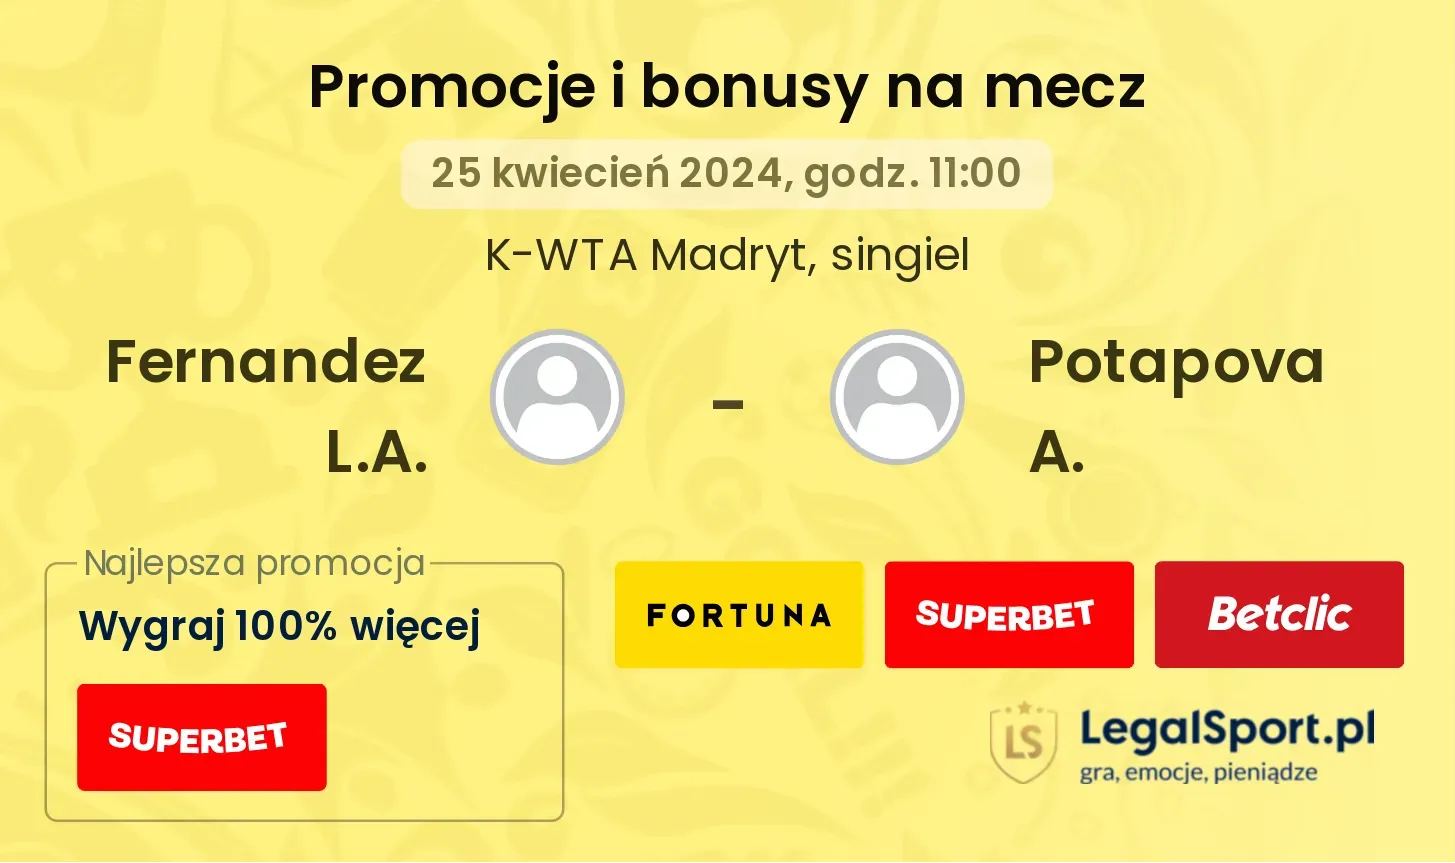 Fernandez L.A. - Potapova A. promocje bonusy na mecz